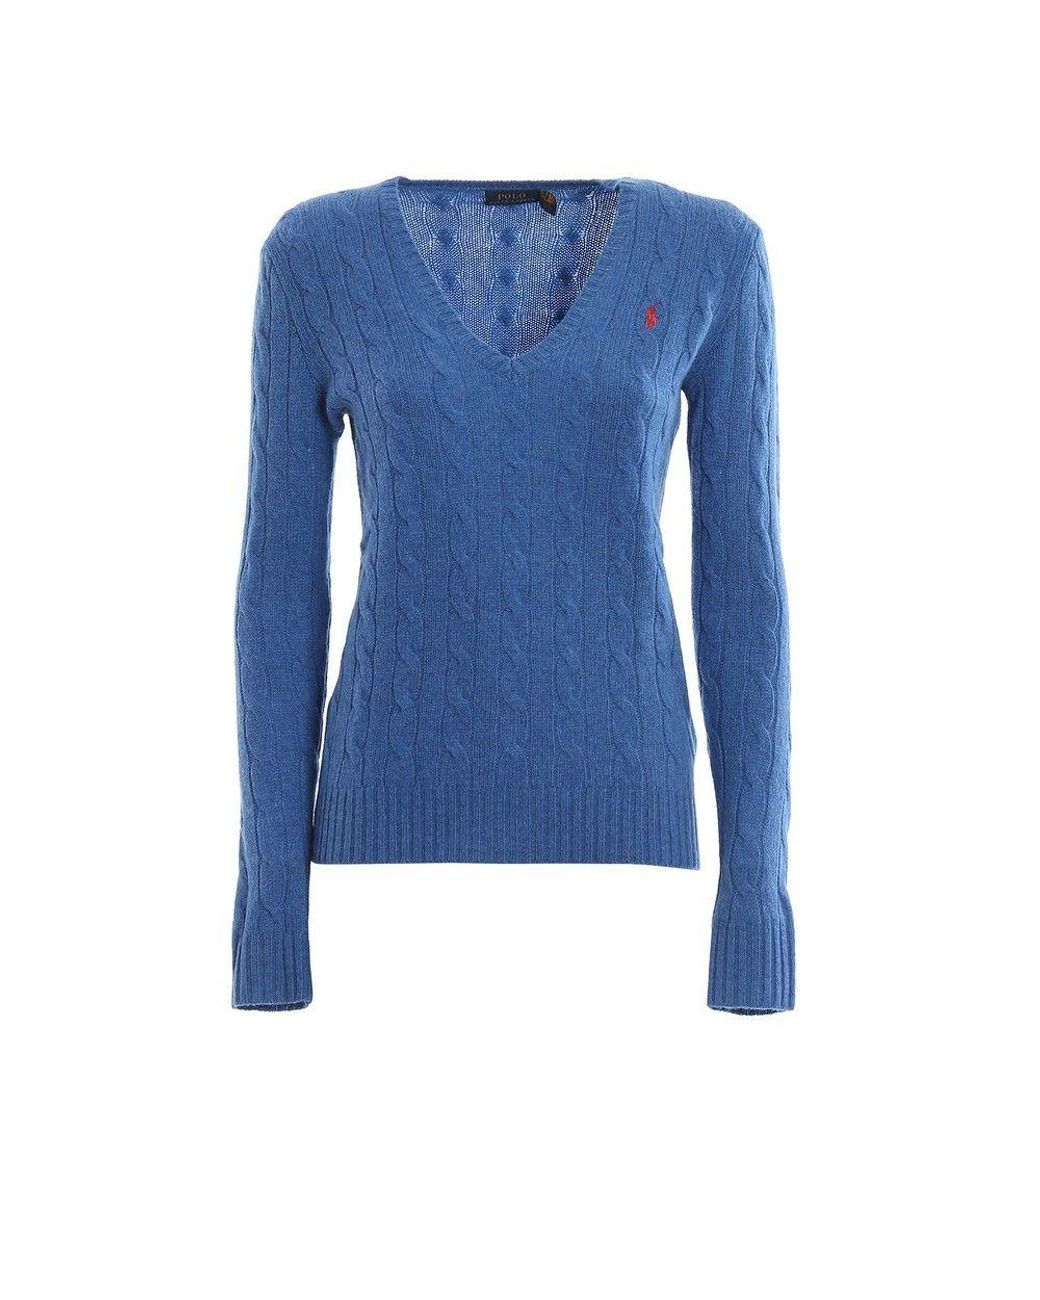 Ralph Lauren Womenswear Cashmere Mix V Neck Knit in Blue - Lyst